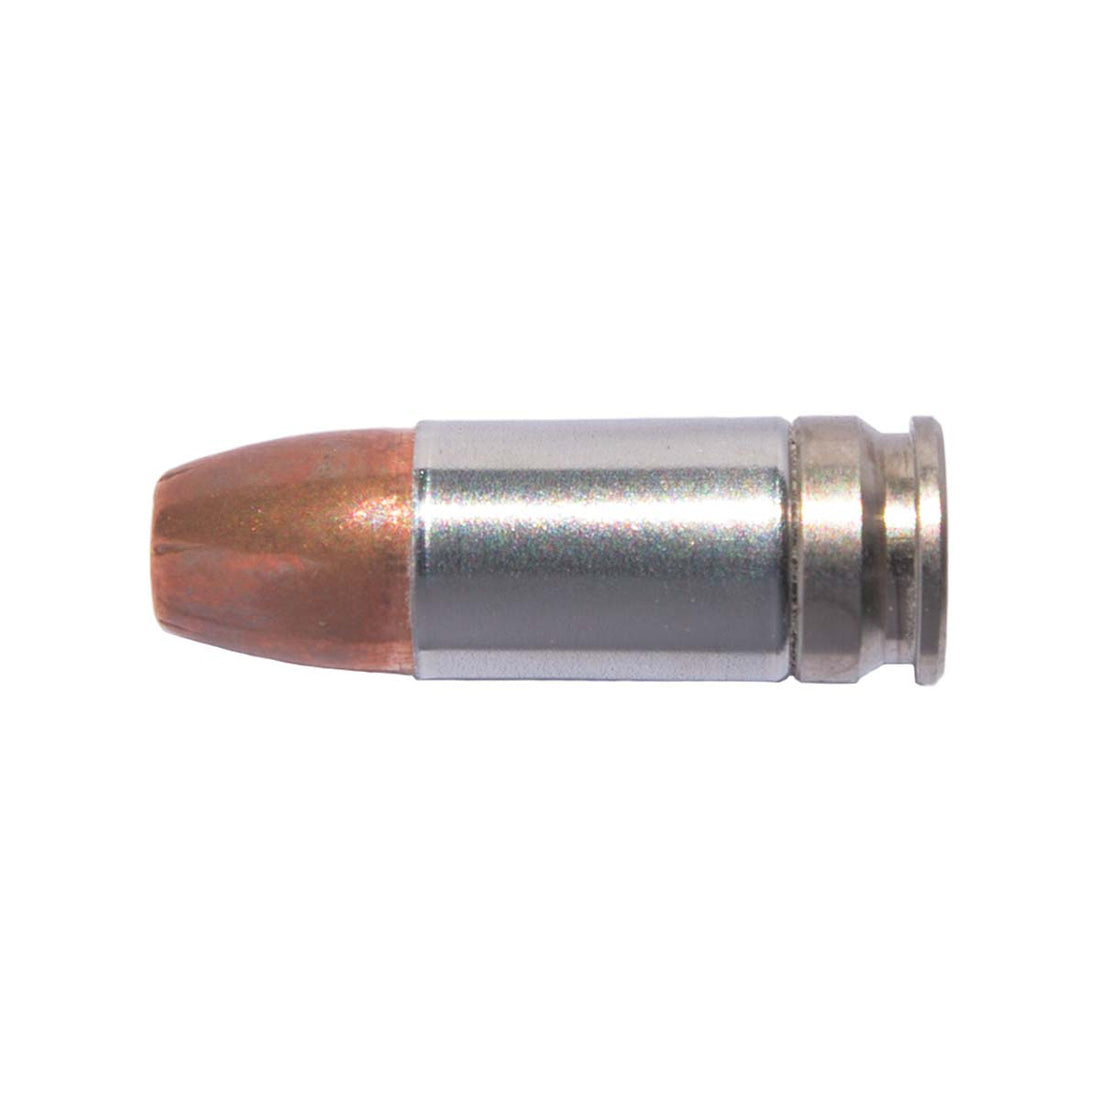 9mm Shell Shock Cartridge, 90 Grain, Frangible